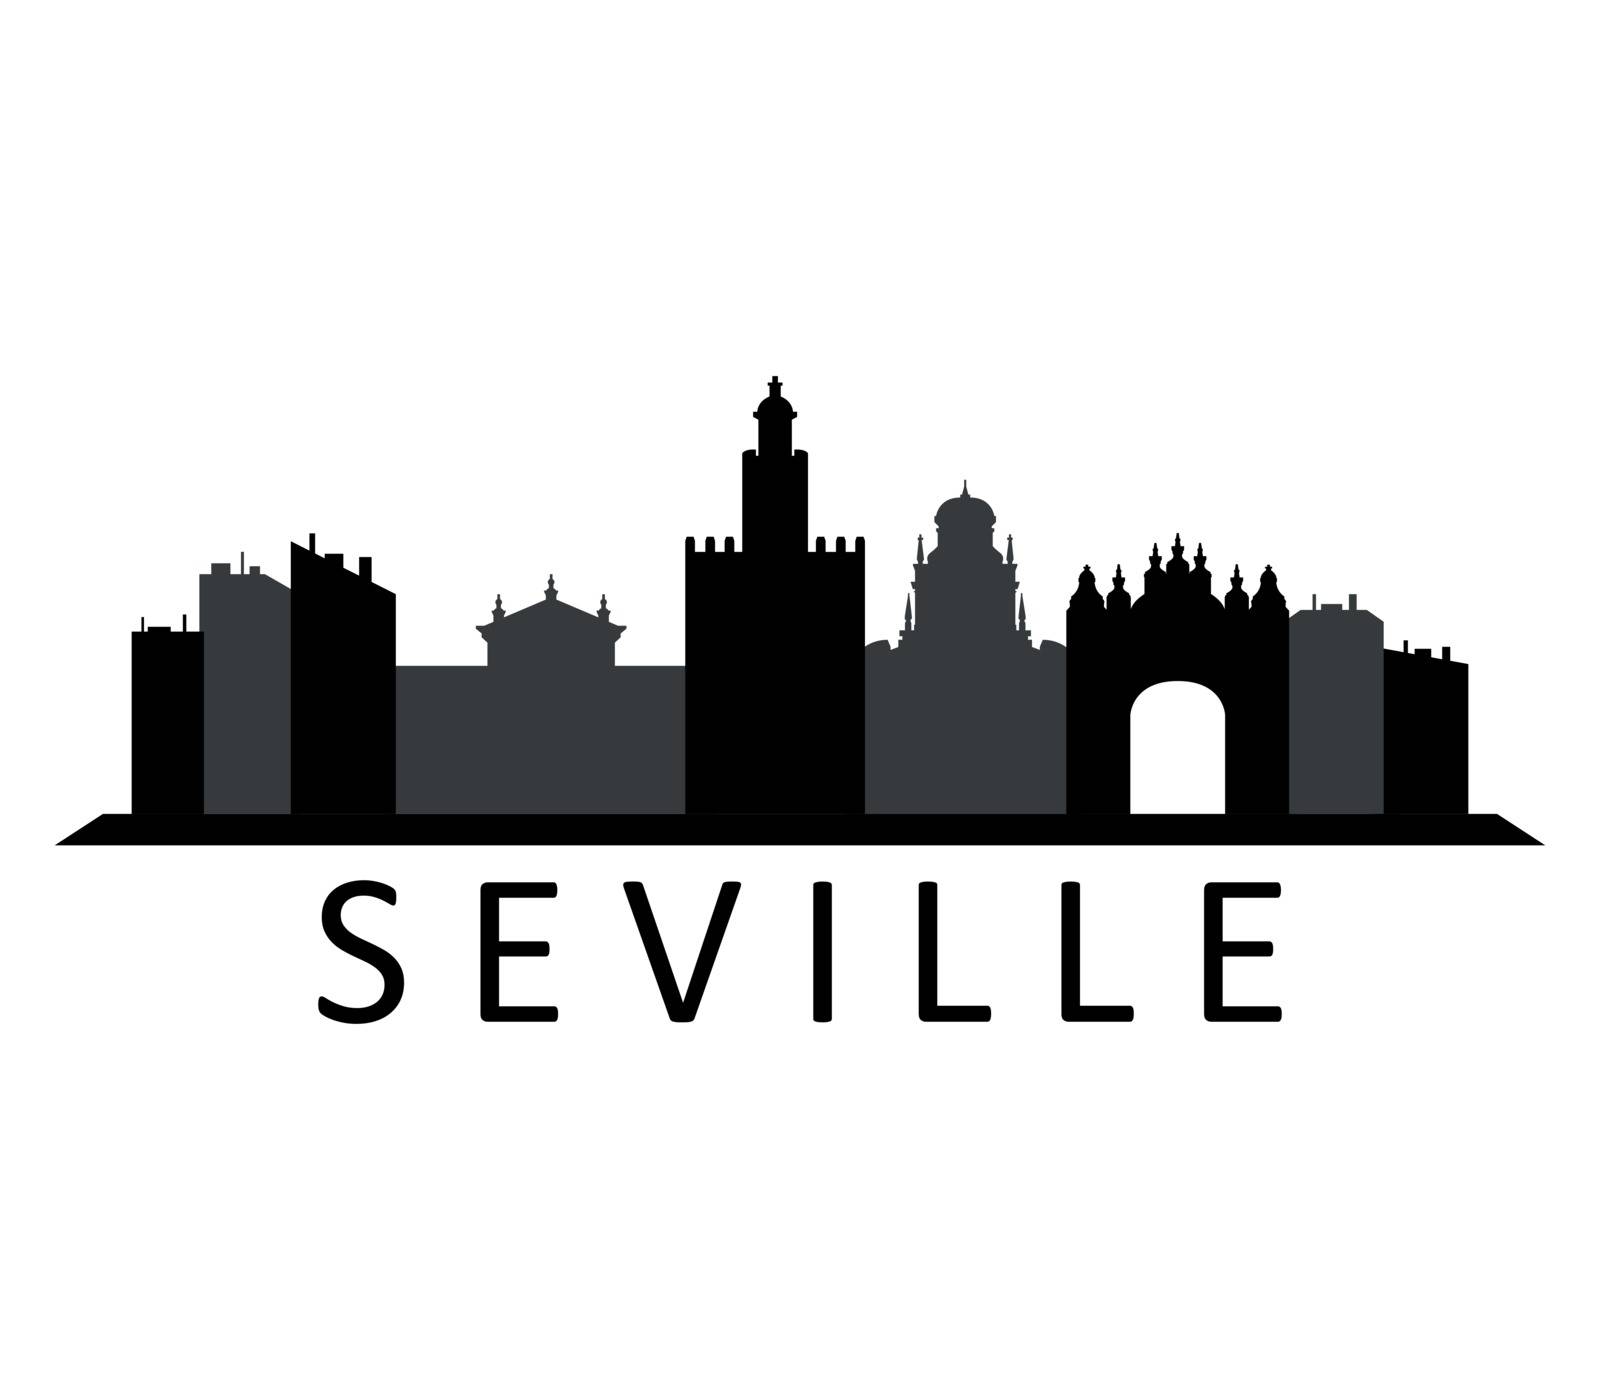 seville skyline by Mark1987